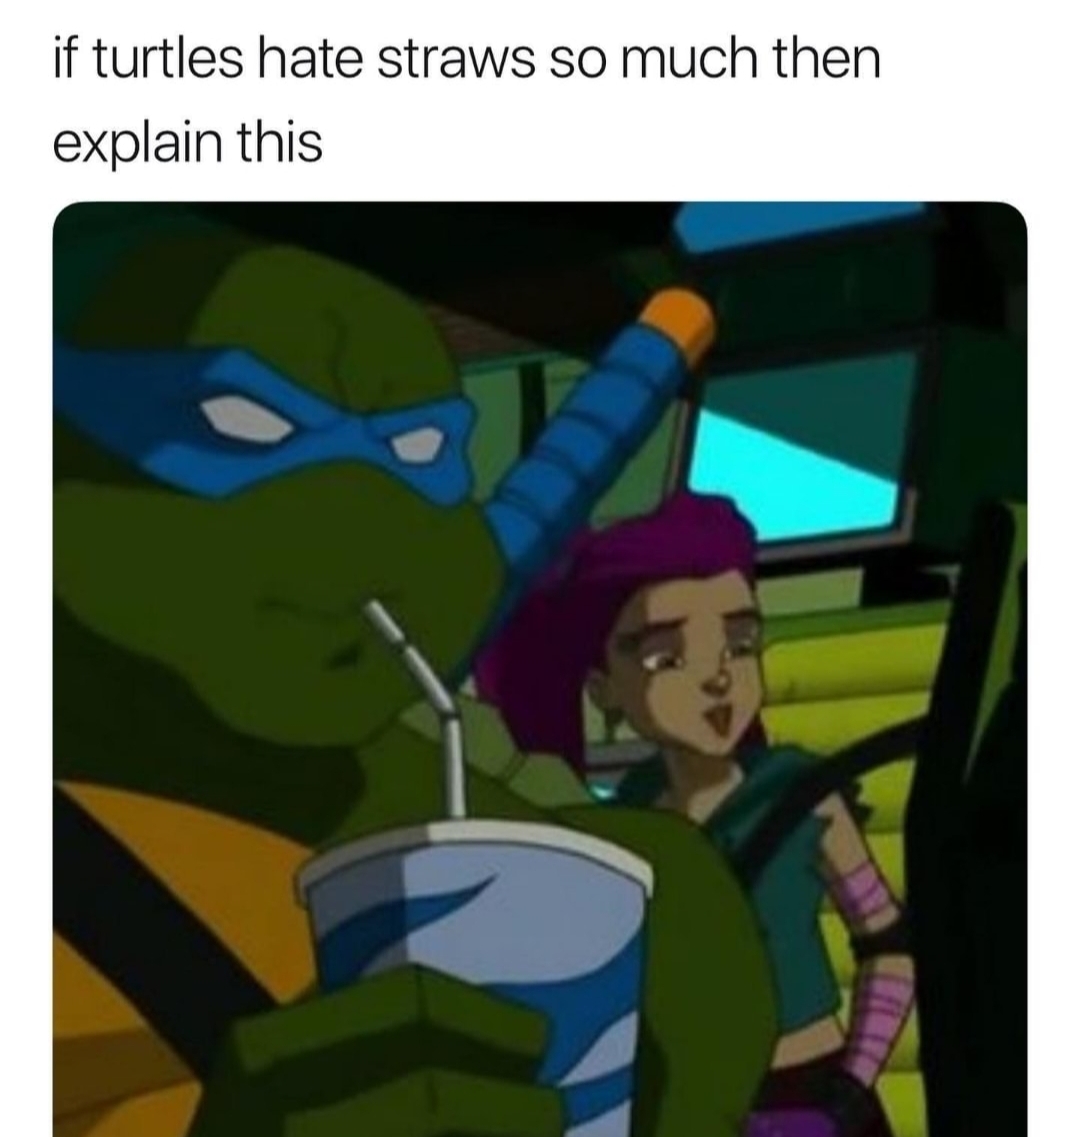 dank memes - funny memes - if turtles hate straws explain - if turtles hate straws so much then explain this